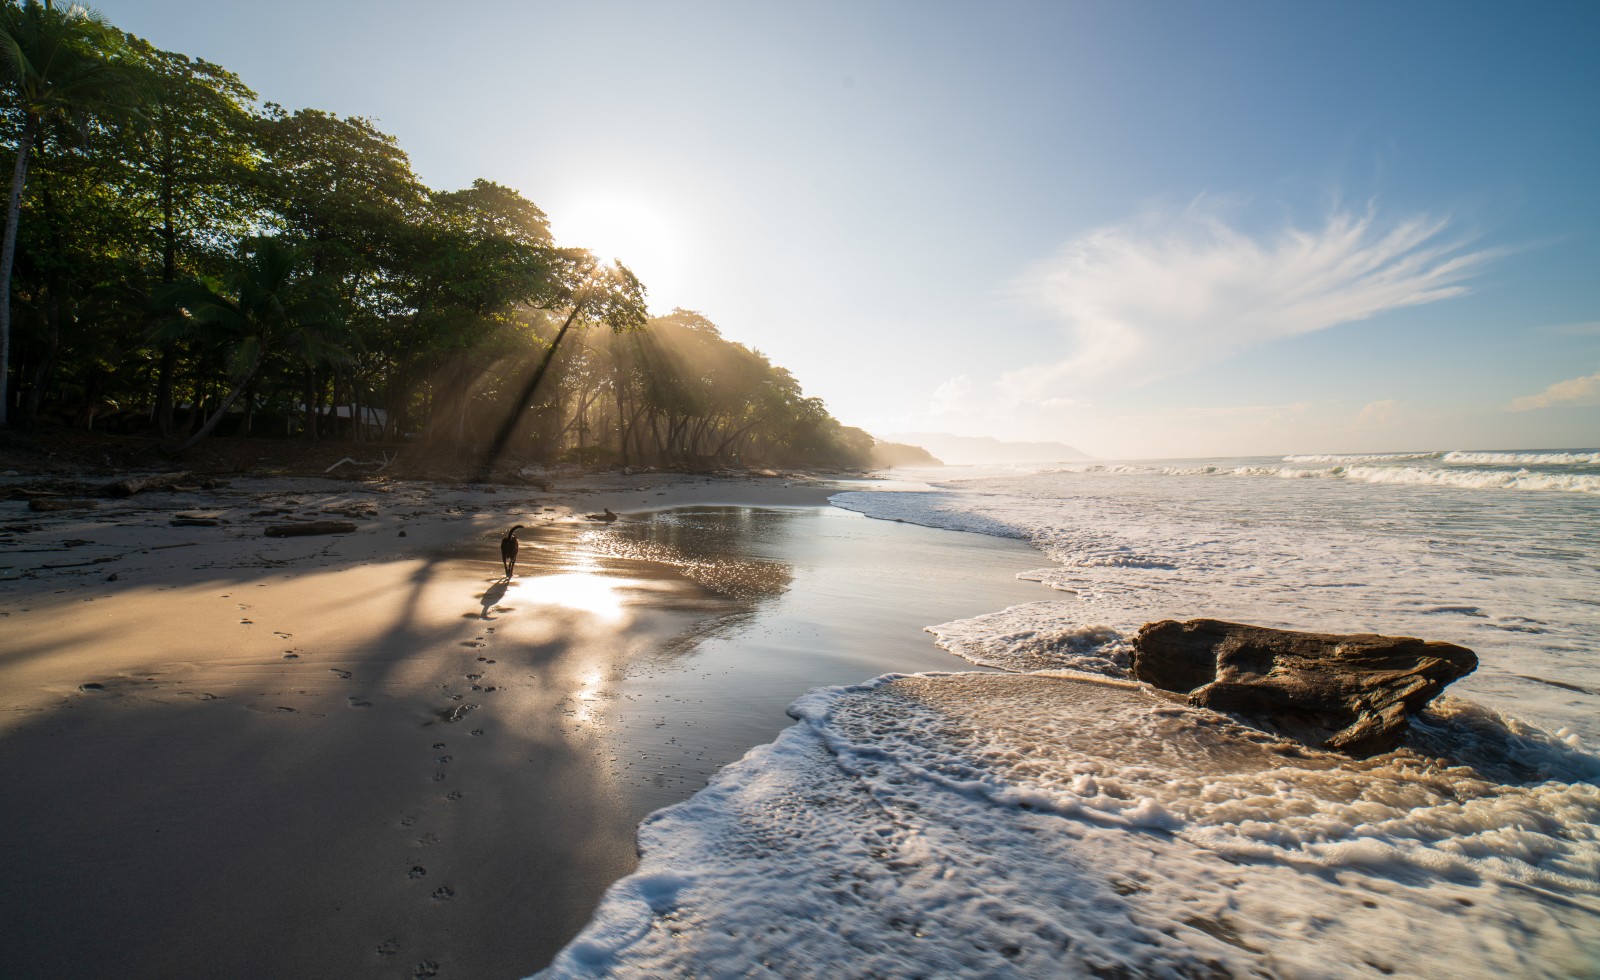 Sunrise on the beach in Santa Teresa, Costa Rica.